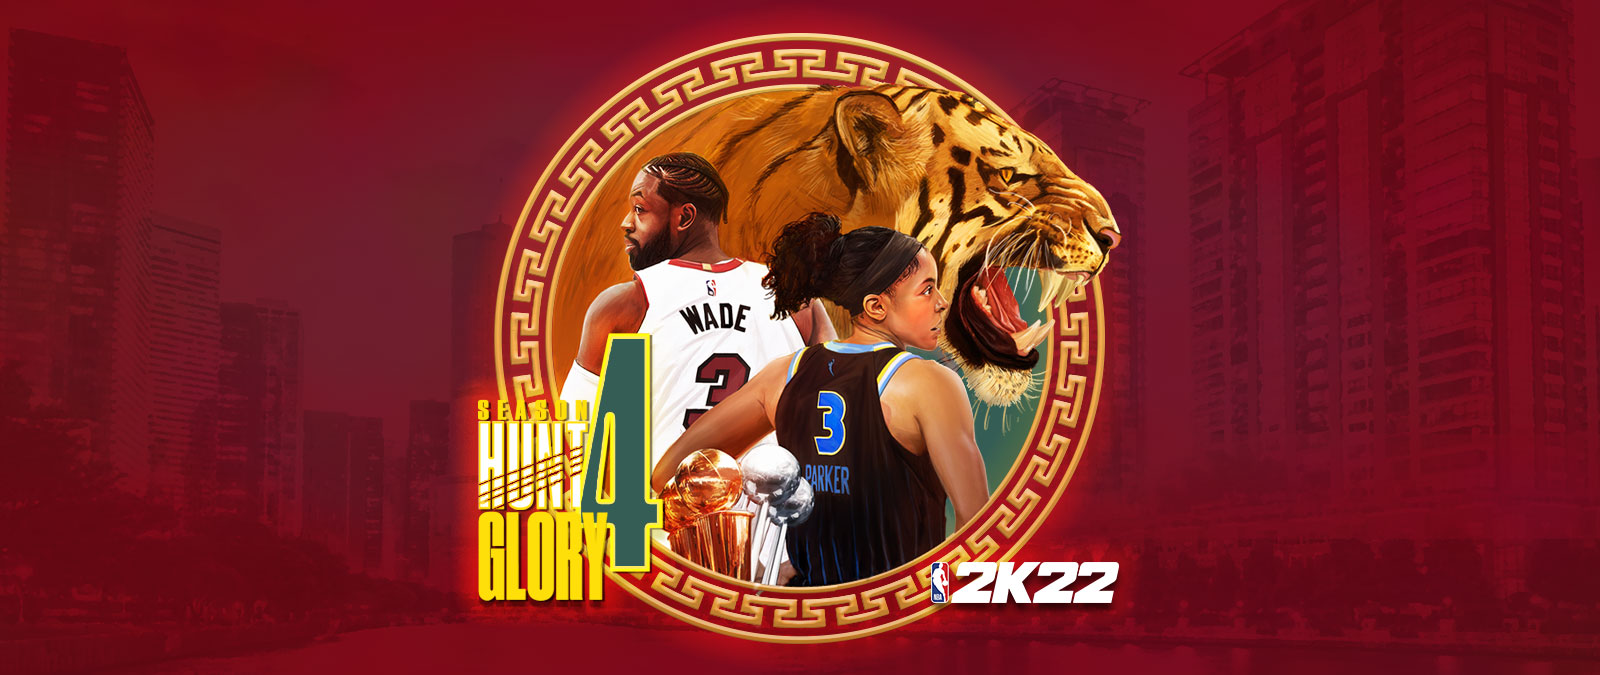 NBA 2K22，Season 4: Hunt 4 Glory，一個圓形東西放在刻畫著城市景色的紅色布幕上，其中有隻吼叫的老虎，還有 Dwayne Wade 和 Candace Parker 轉過身。 